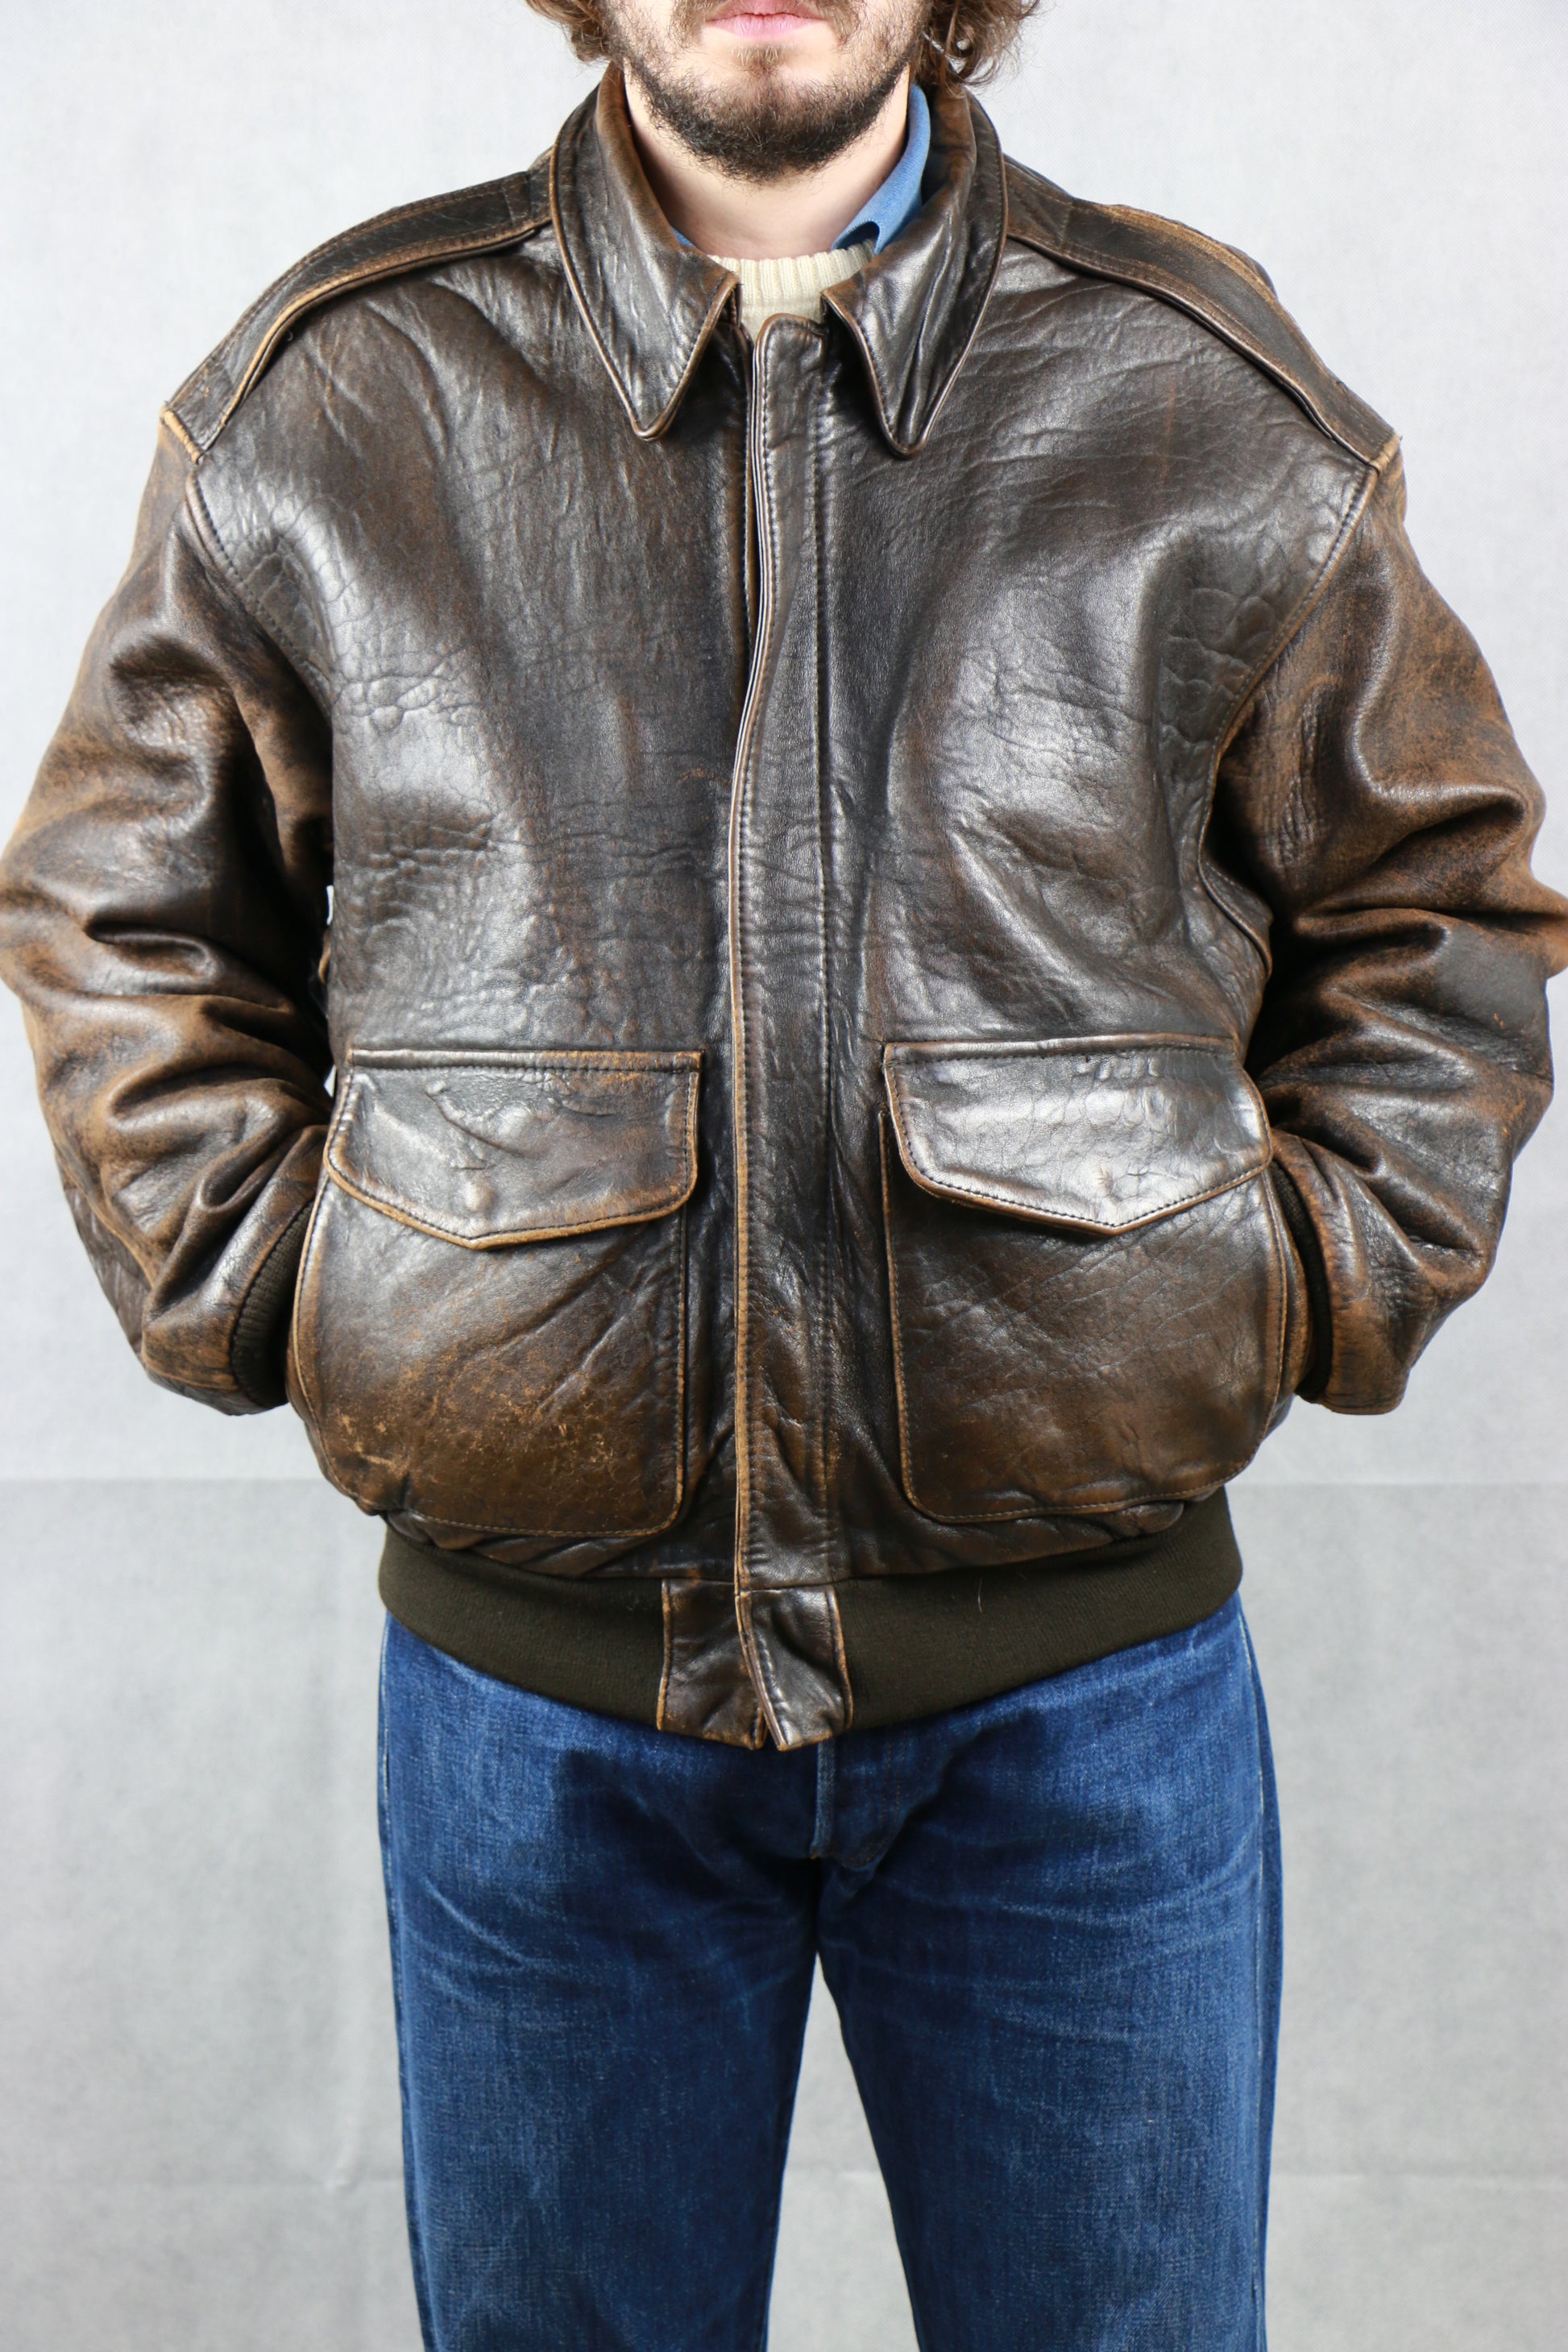 A-2 Leather Flight Jacket - vintage clothing clochard92.com